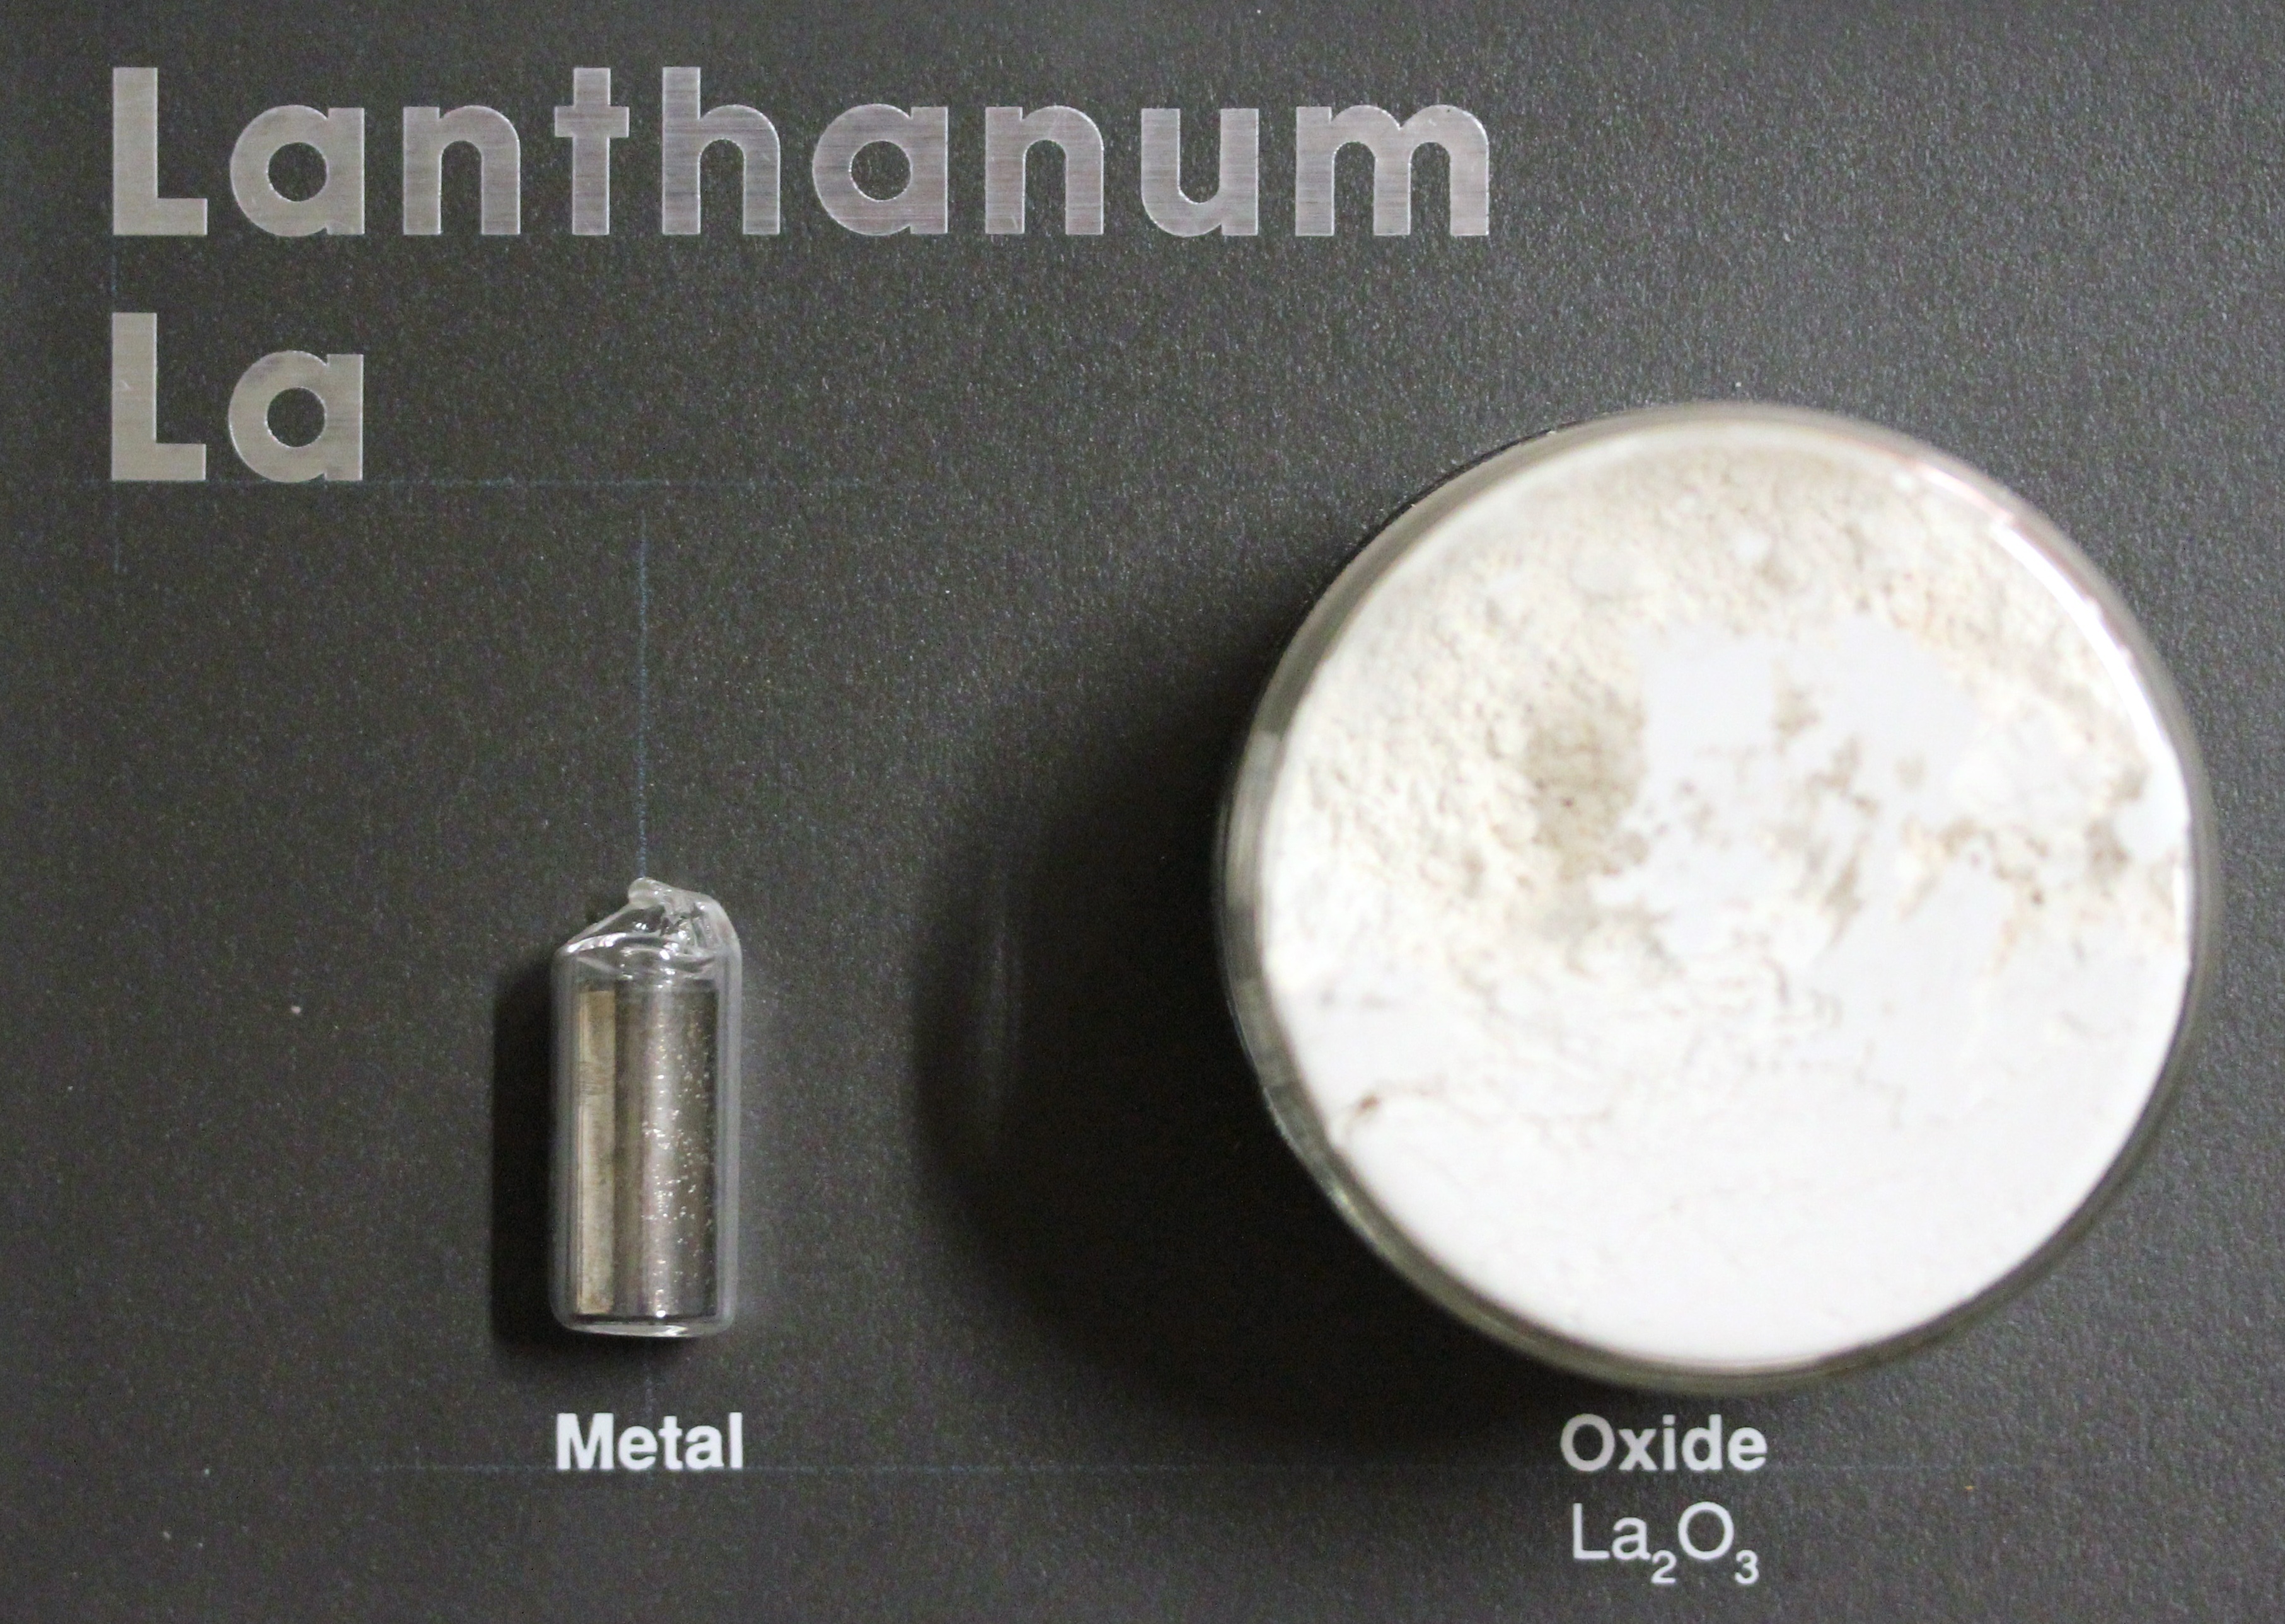 Lanthanum metal and oxide